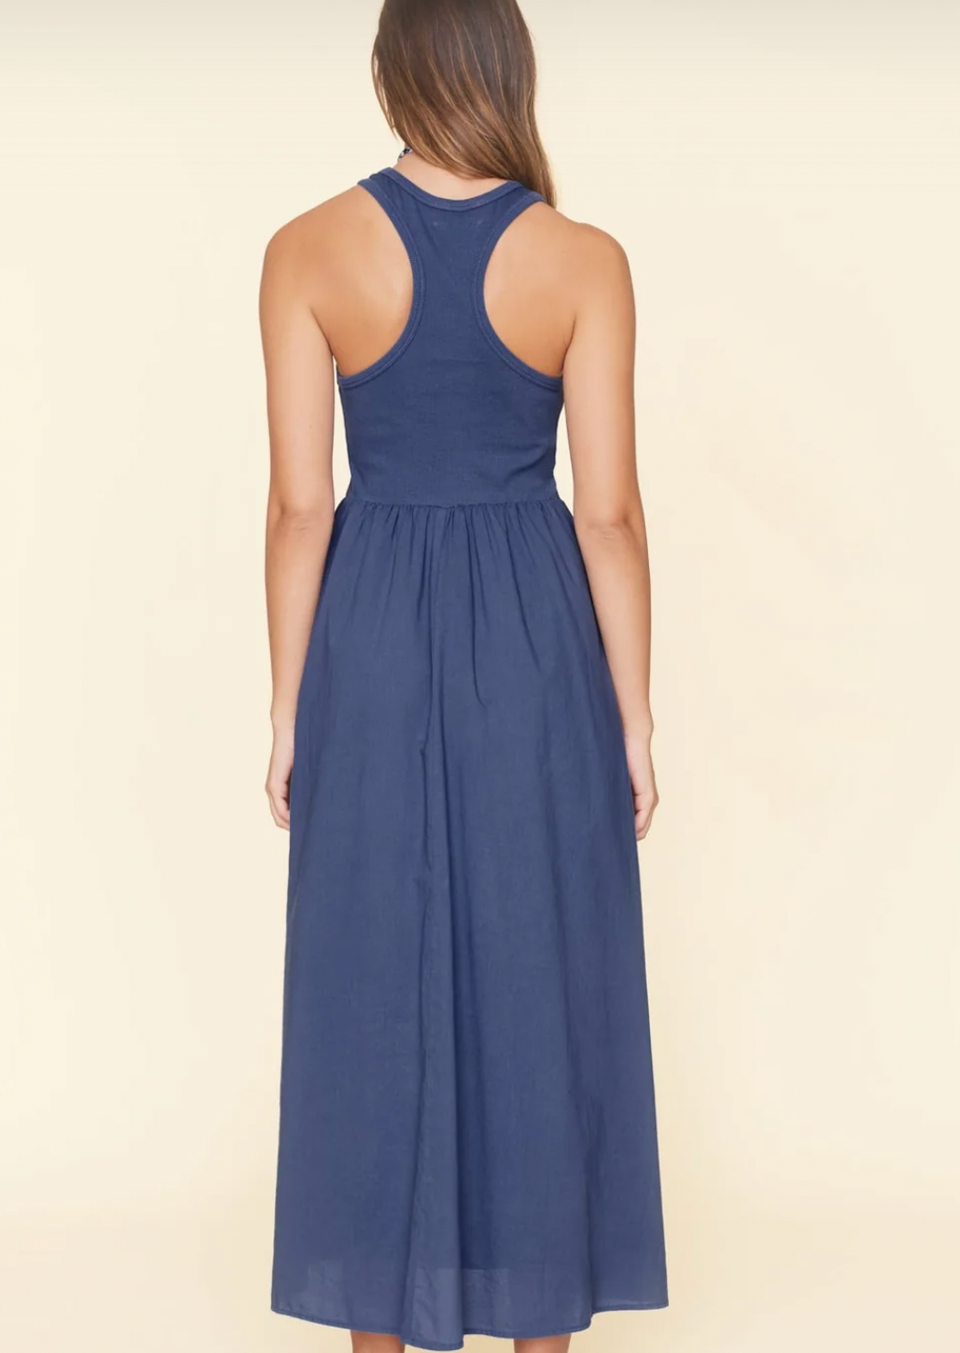 The Xírena Flynn Dress in Marlin Blue 